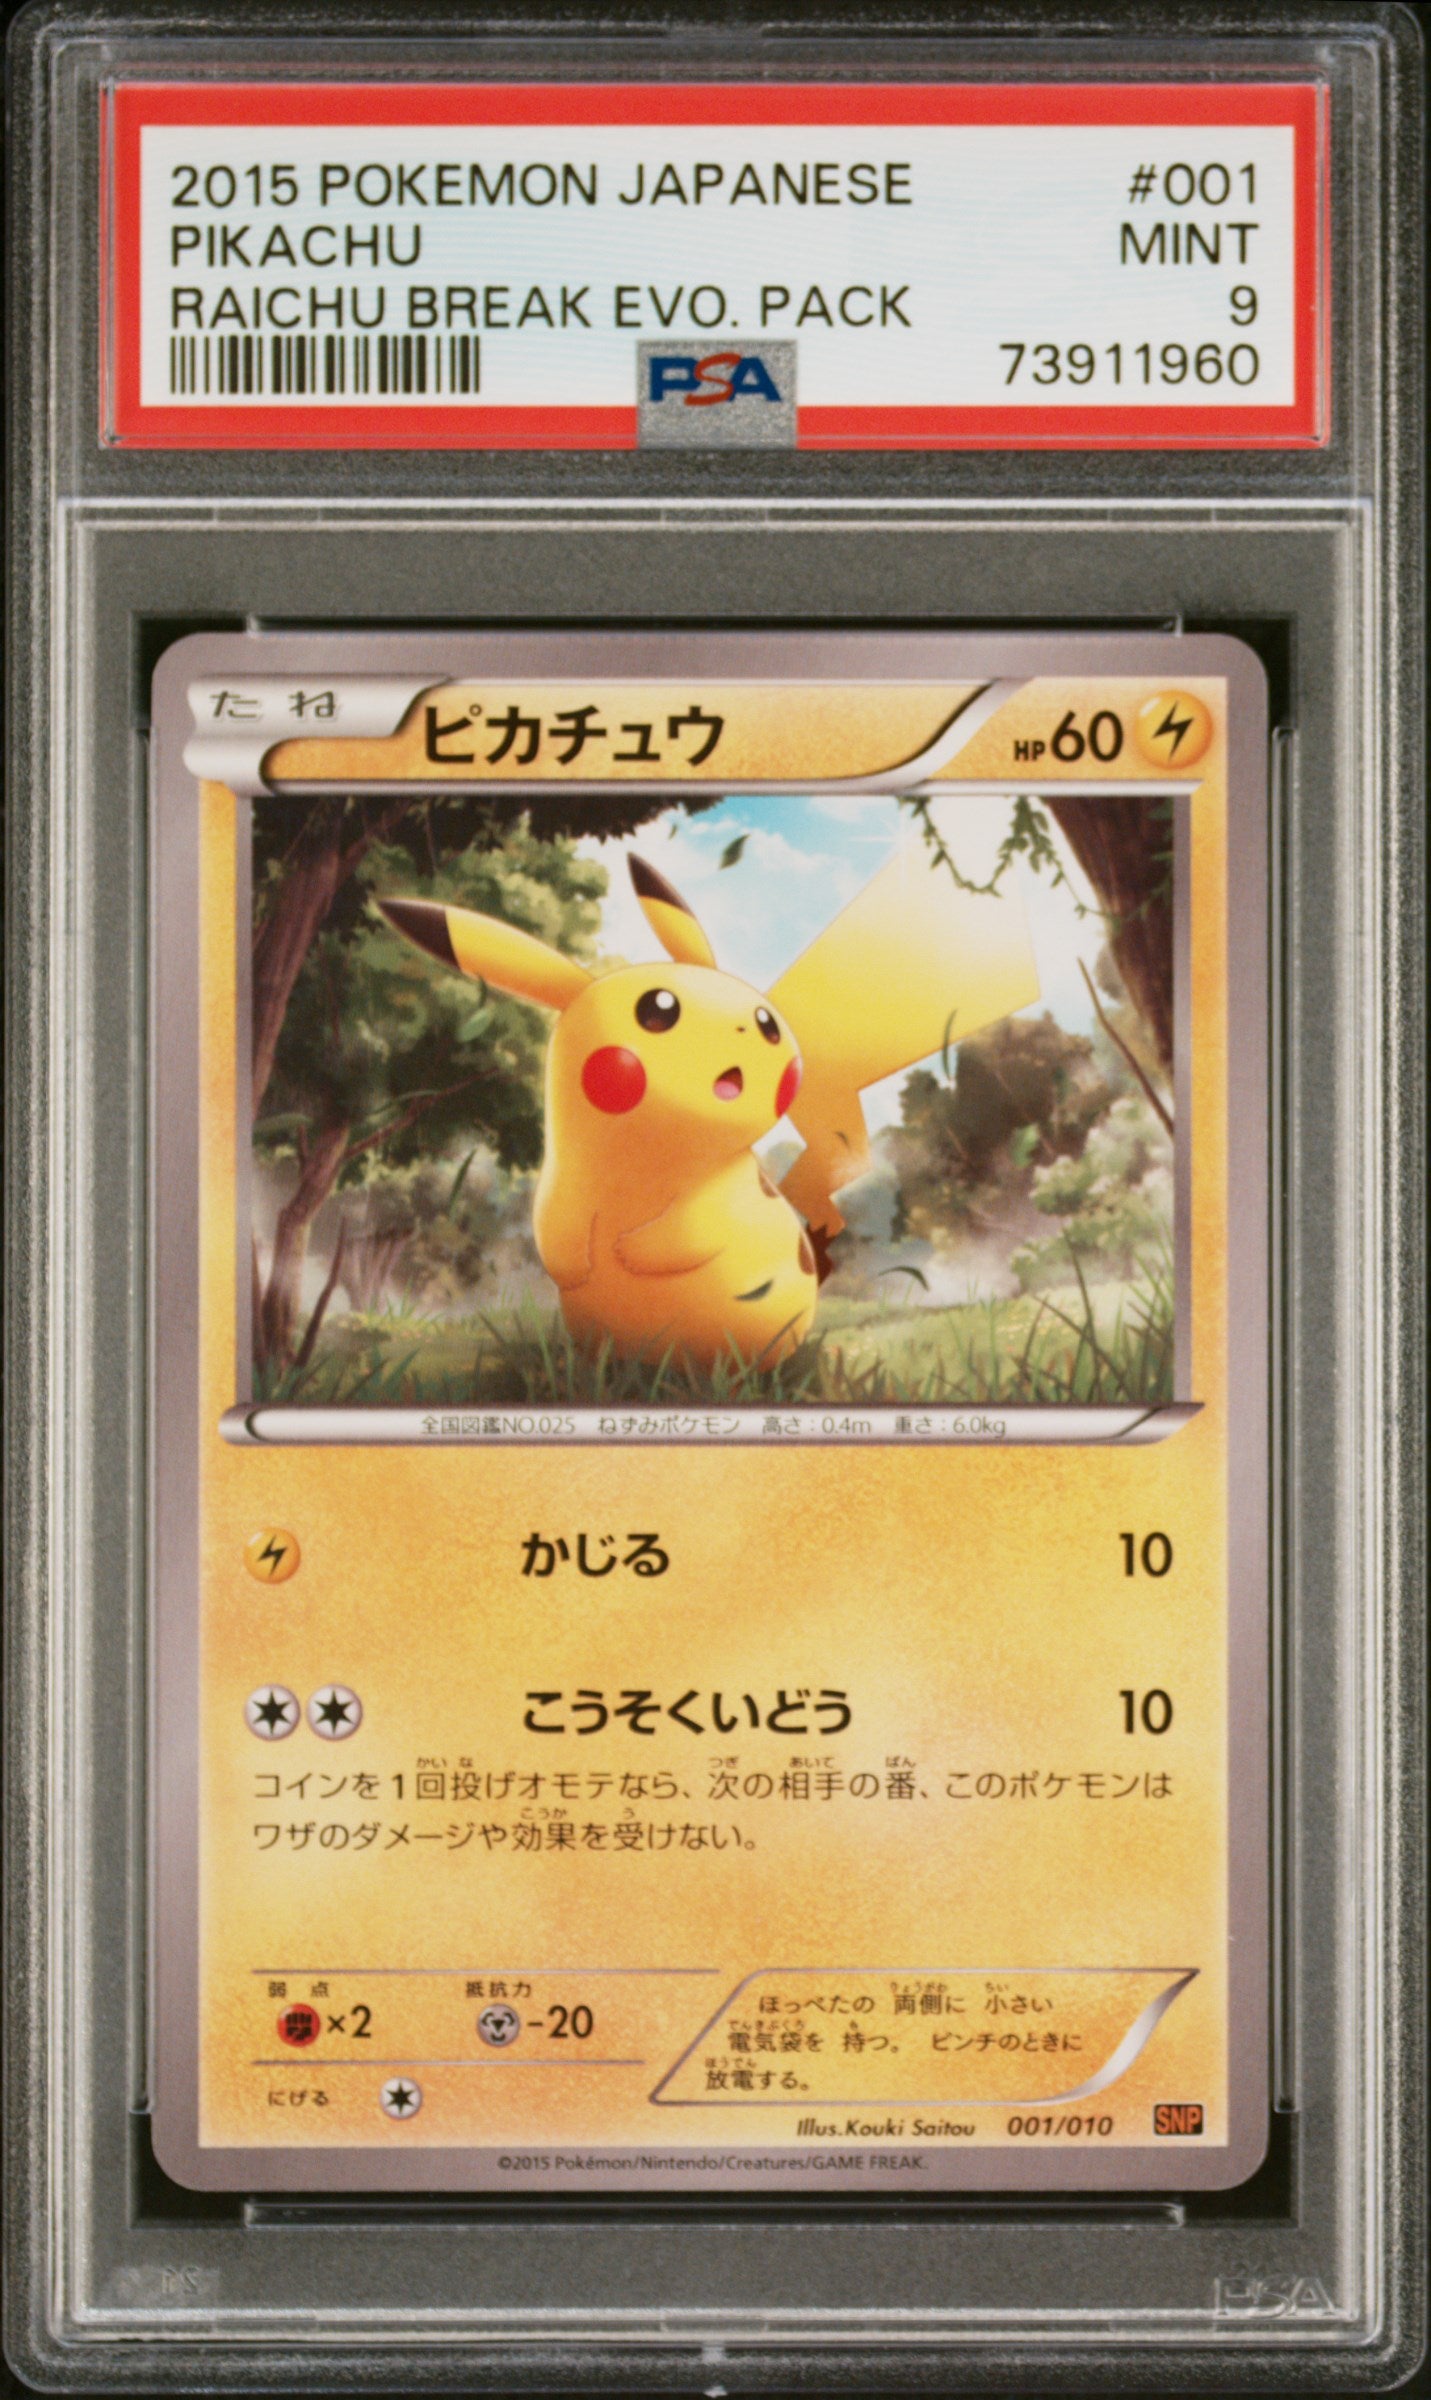 PSA 9 - Pokemon - Pikachu - Raichu Break Evo Pack - 001/010 